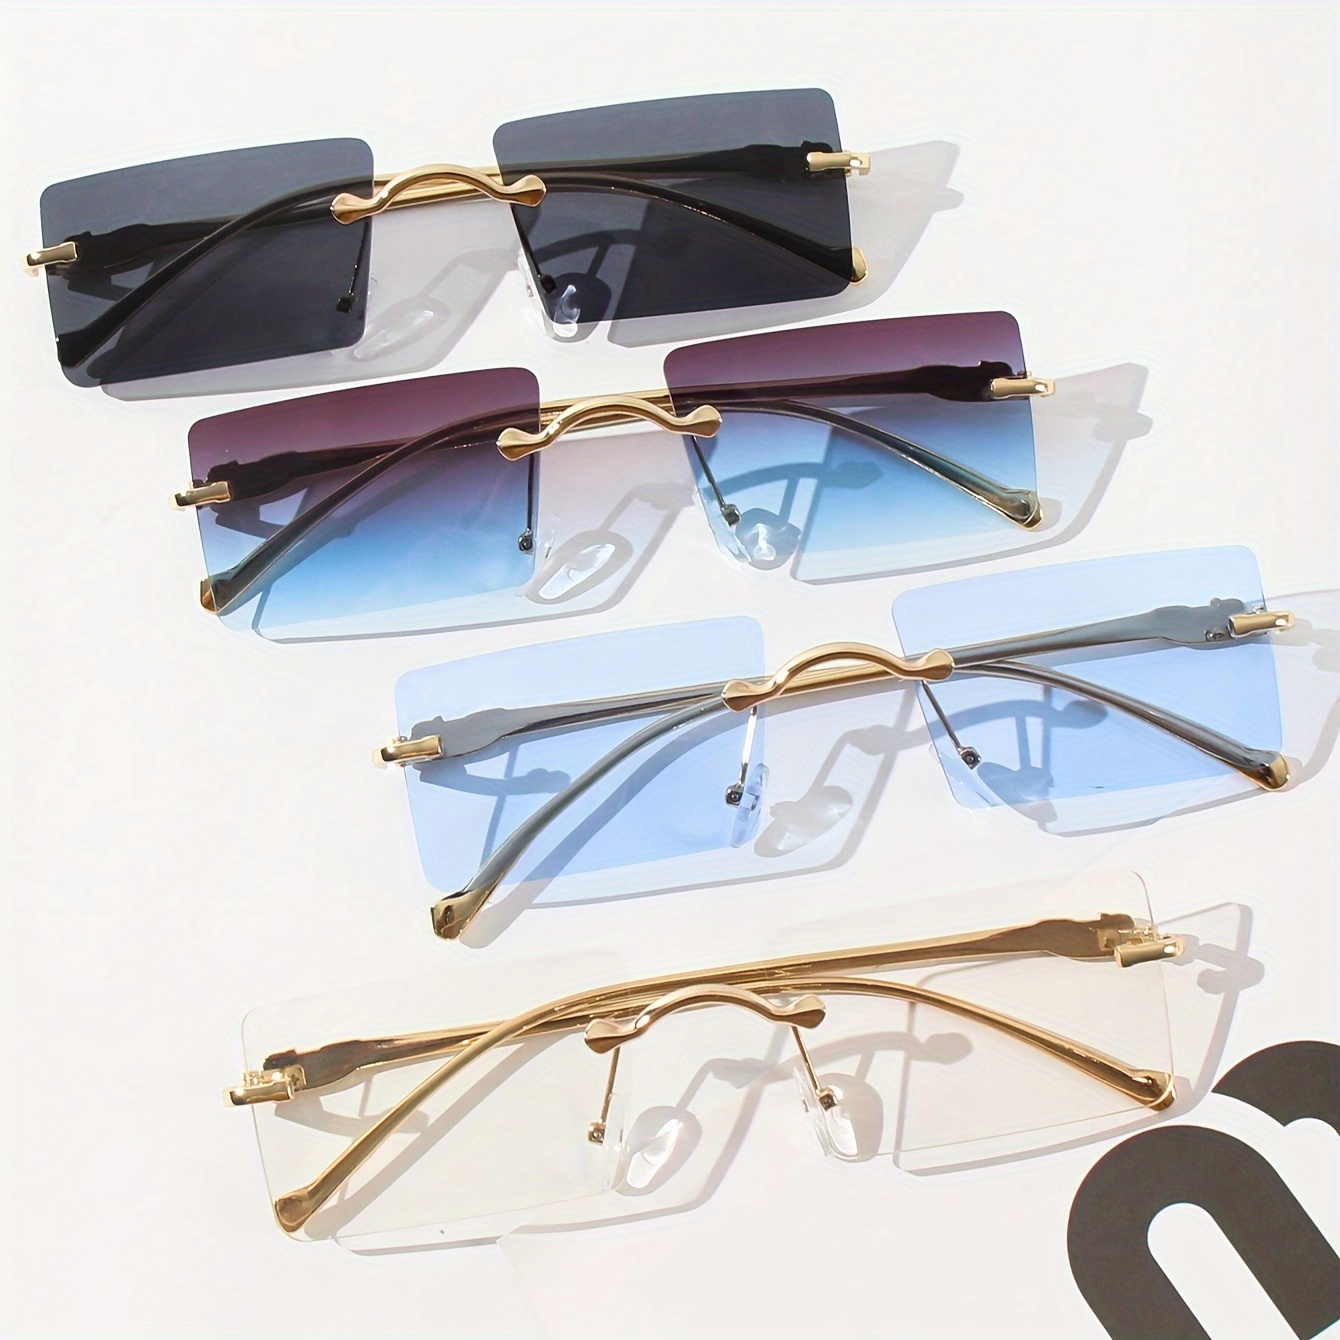 

4pcs Rimless Fashion Glasses, Zinc Alloy Frameless Fashion Sunnies, Unisex Ultralight Anti Glare Sun Shades